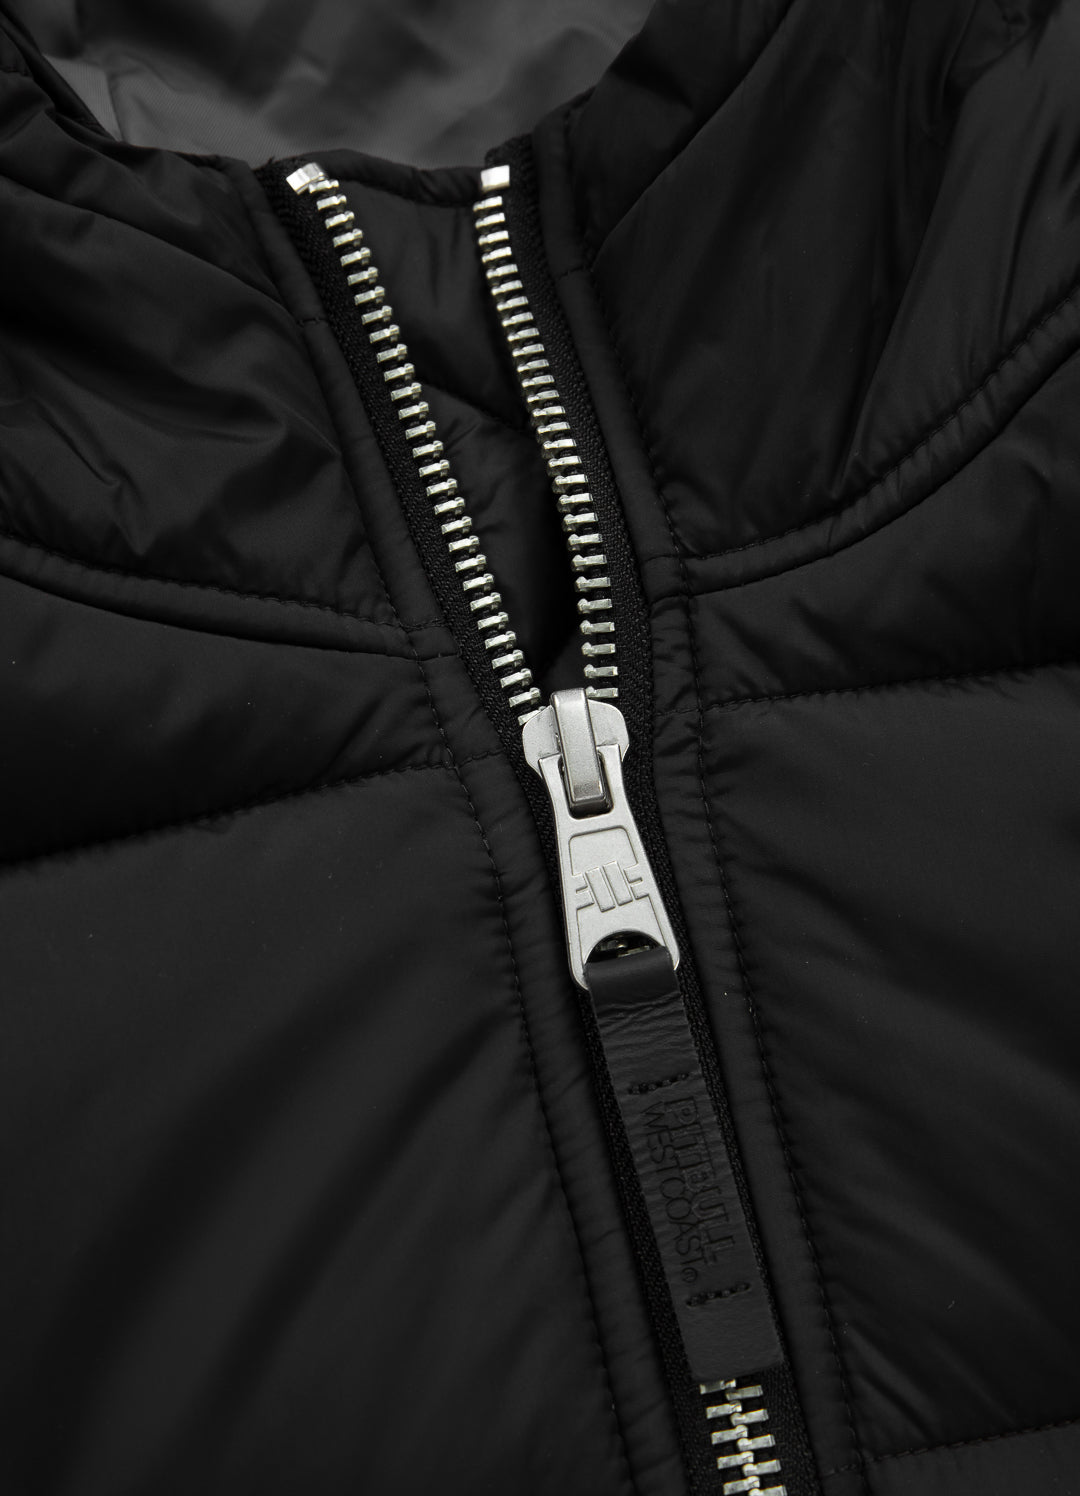 Padded Jacket Topside 2 Black - Pitbull West Coast International Store 